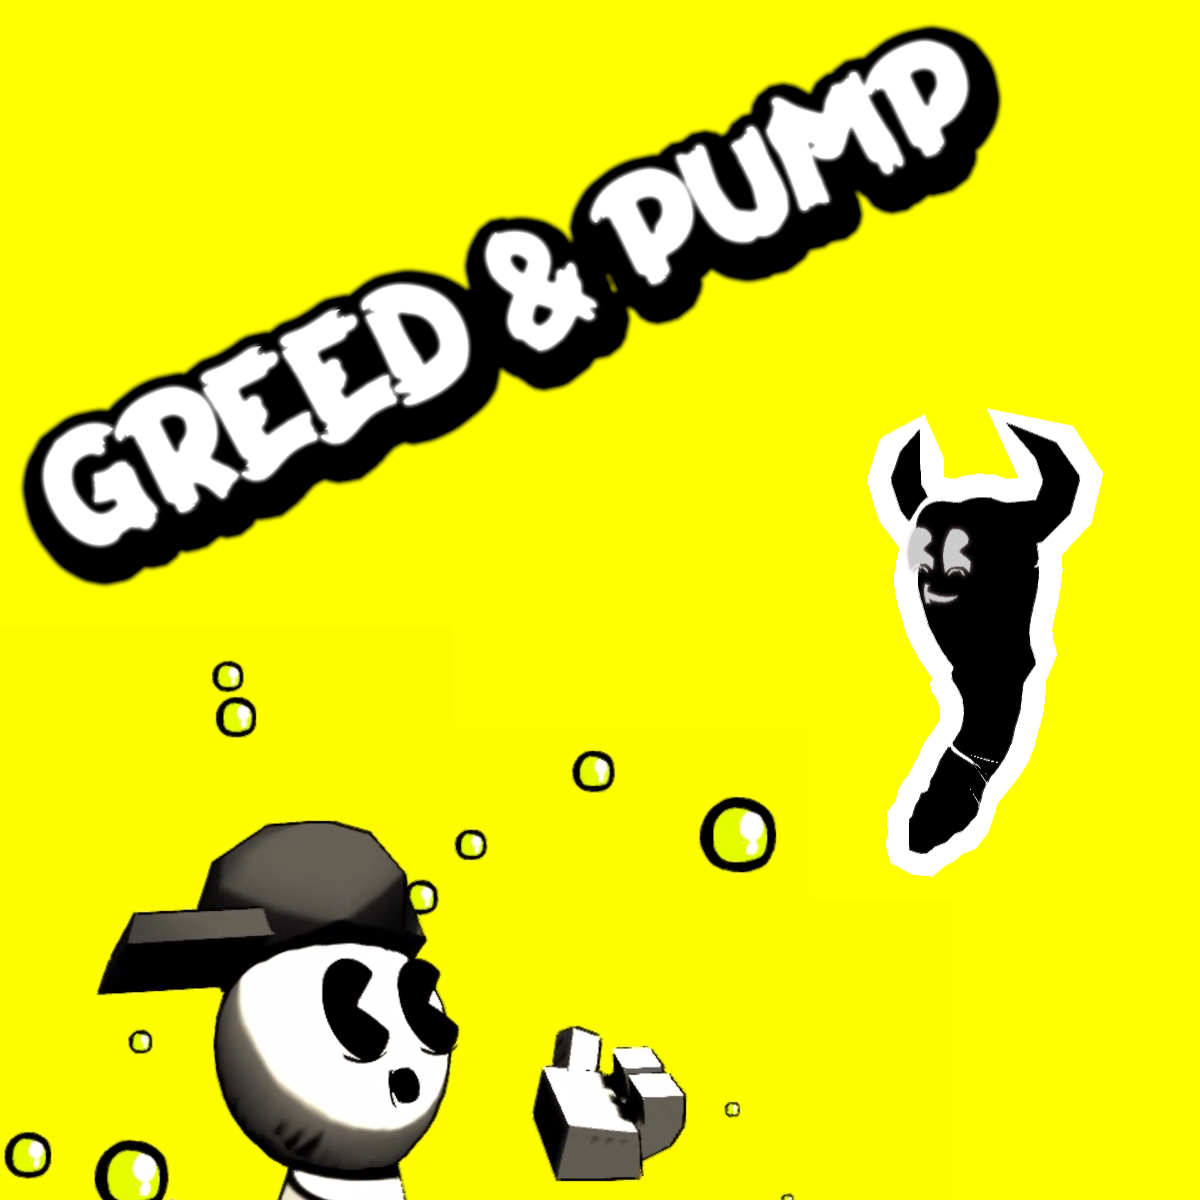 Greed & Pump